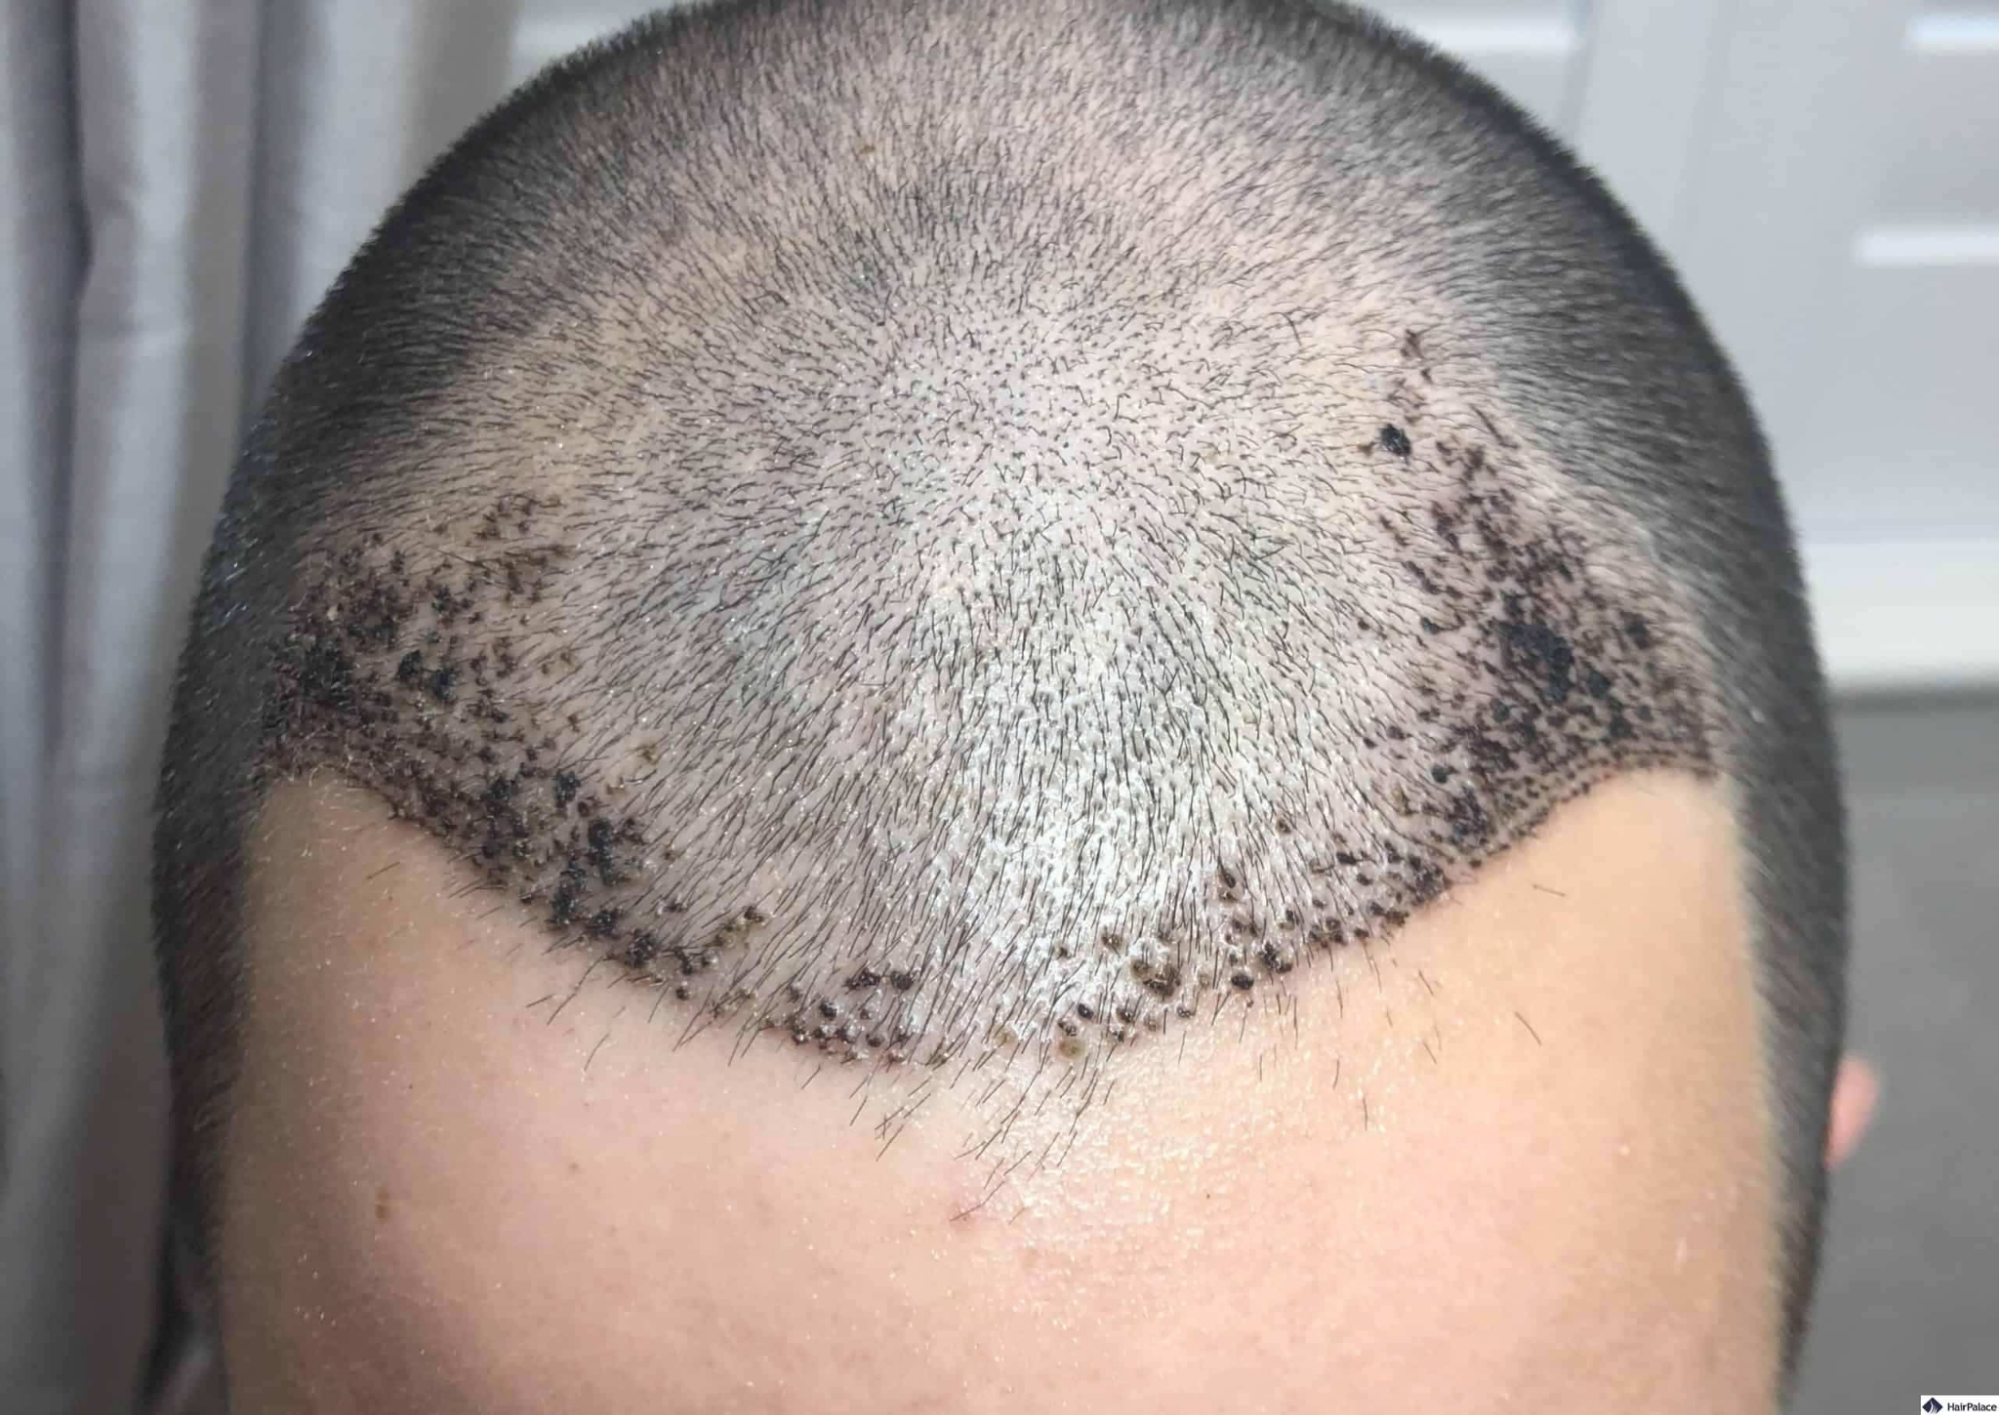 hair transplant scabs after a week